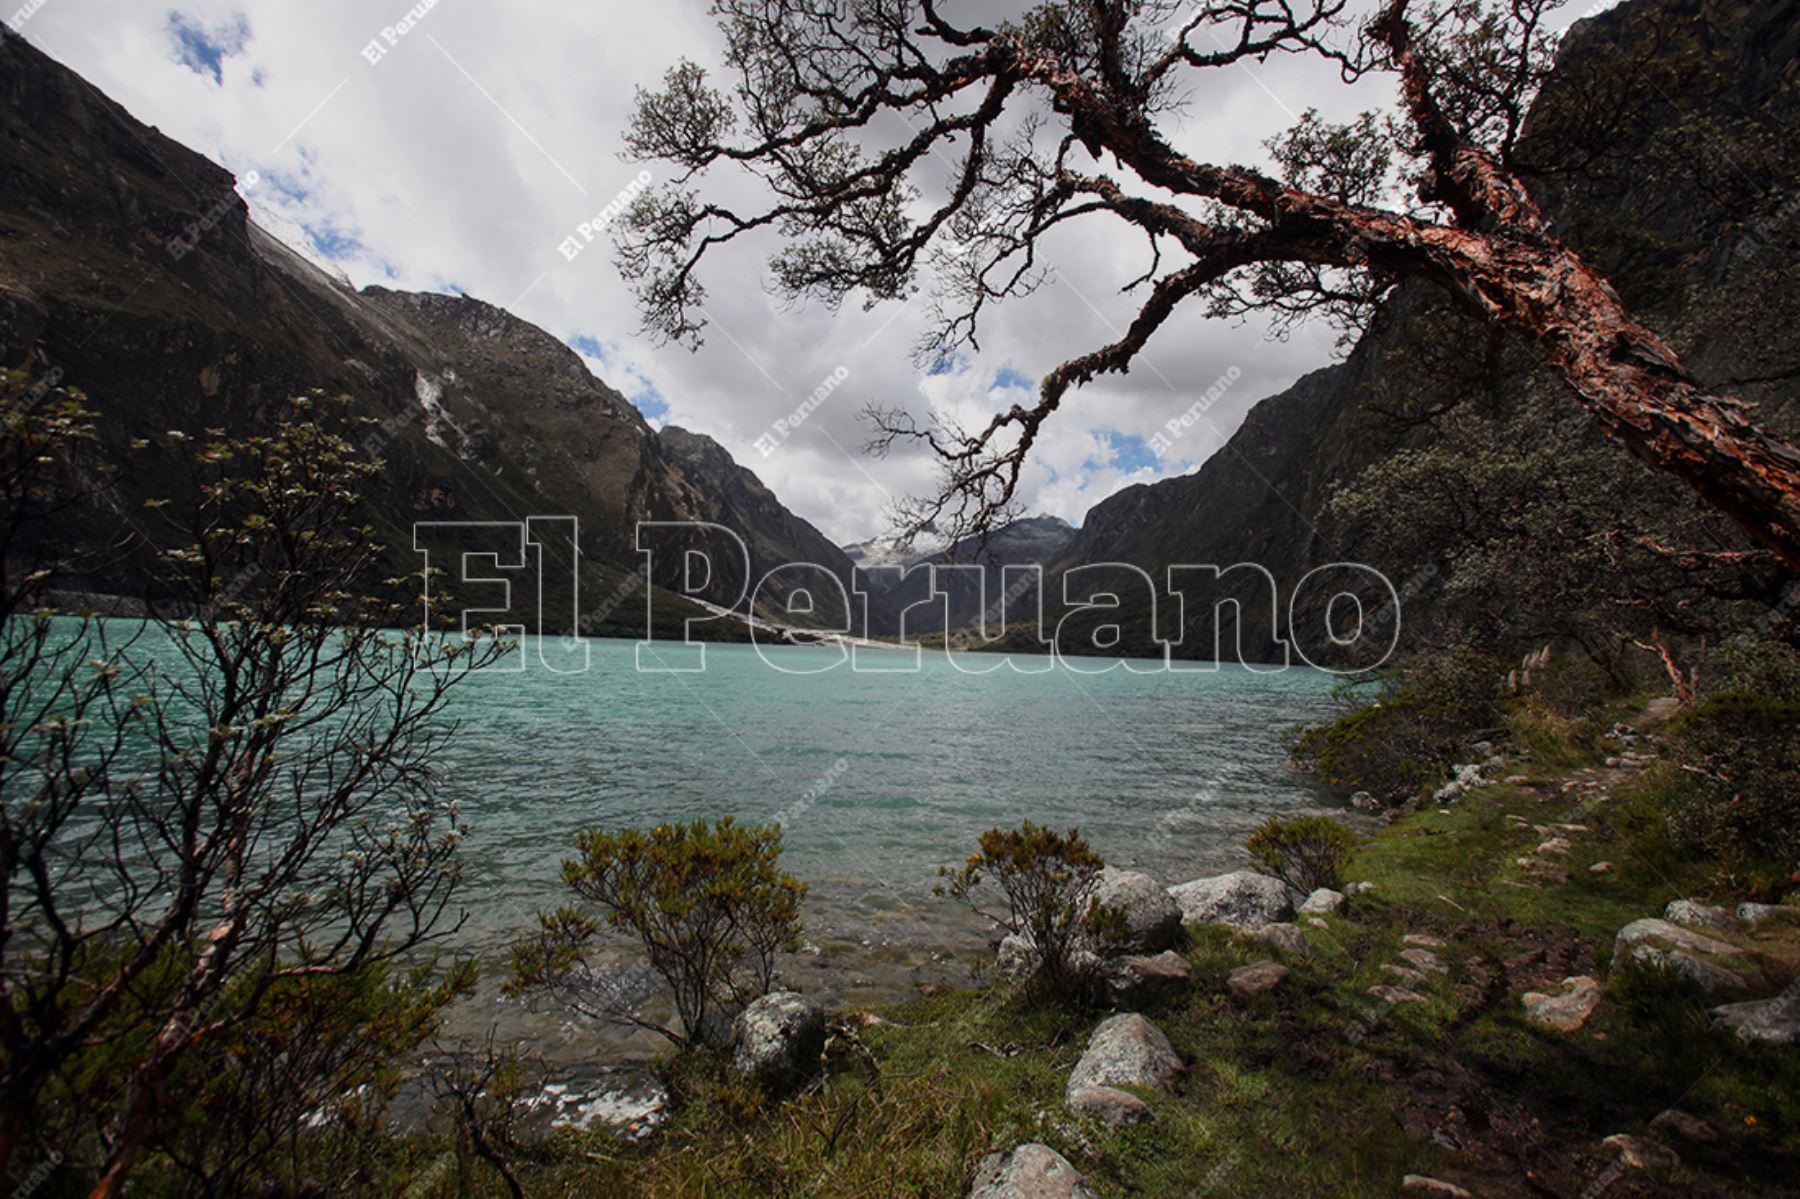 Ancash - 23 abril 2010 / Laguna de Llanganuco en el Parque Nacional Huascarán. 
Foto Diario Oficial El Peruano / Rubén Grandez